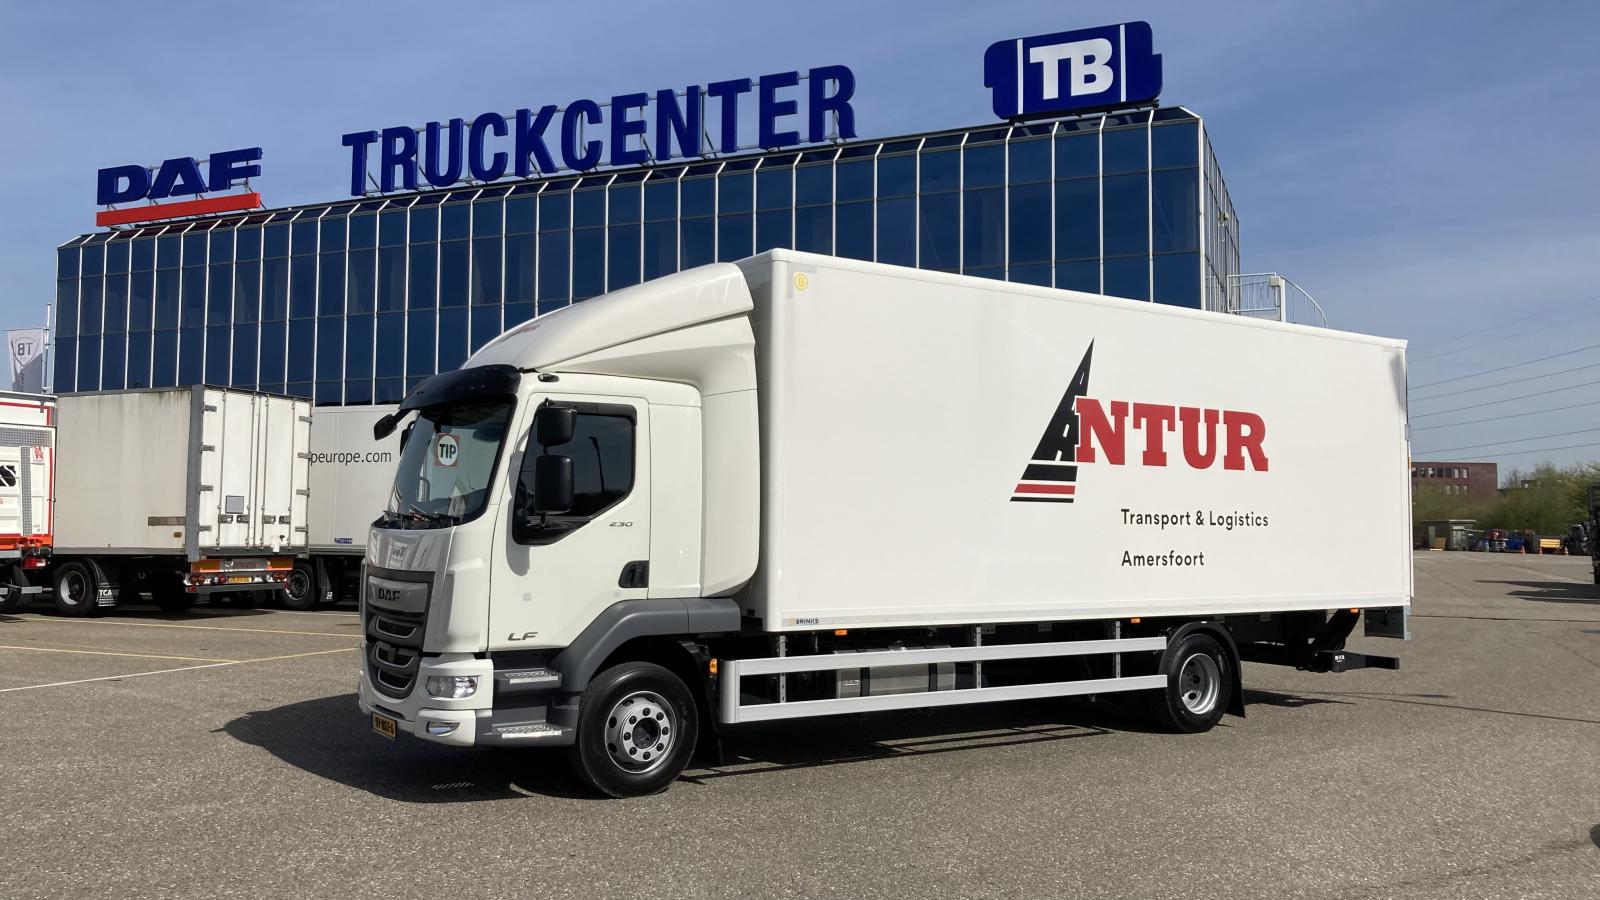 NTUR Transport & Logistics BV